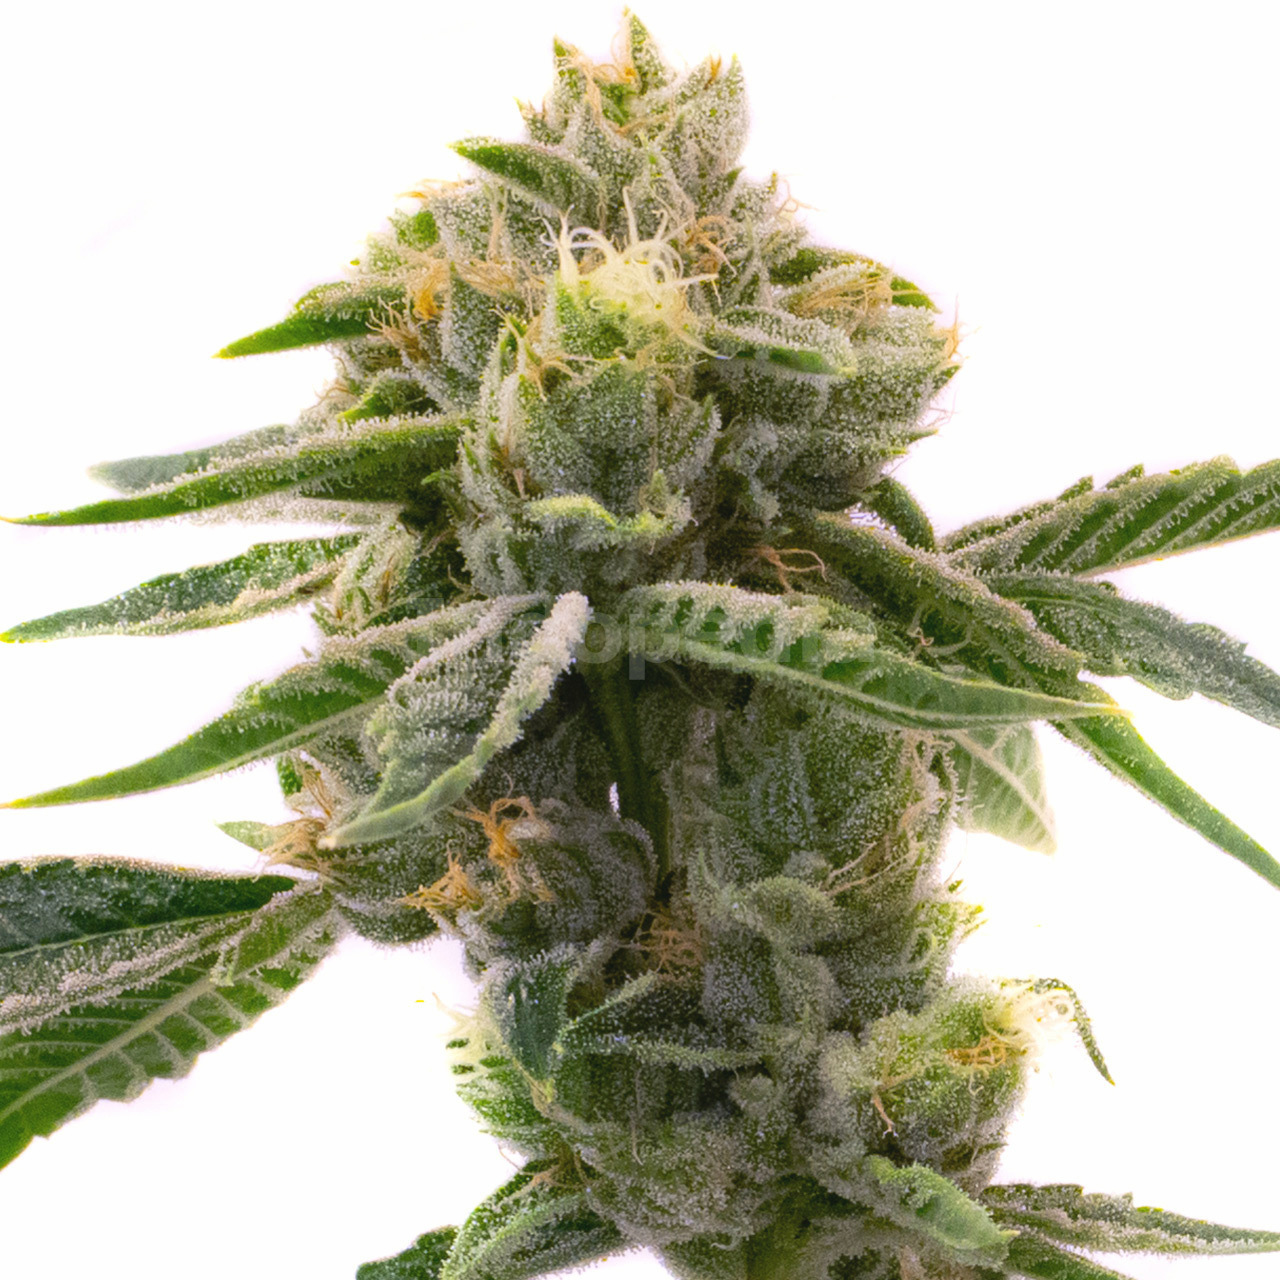 Sweet Tooth Autoflower Cannabis Seeds